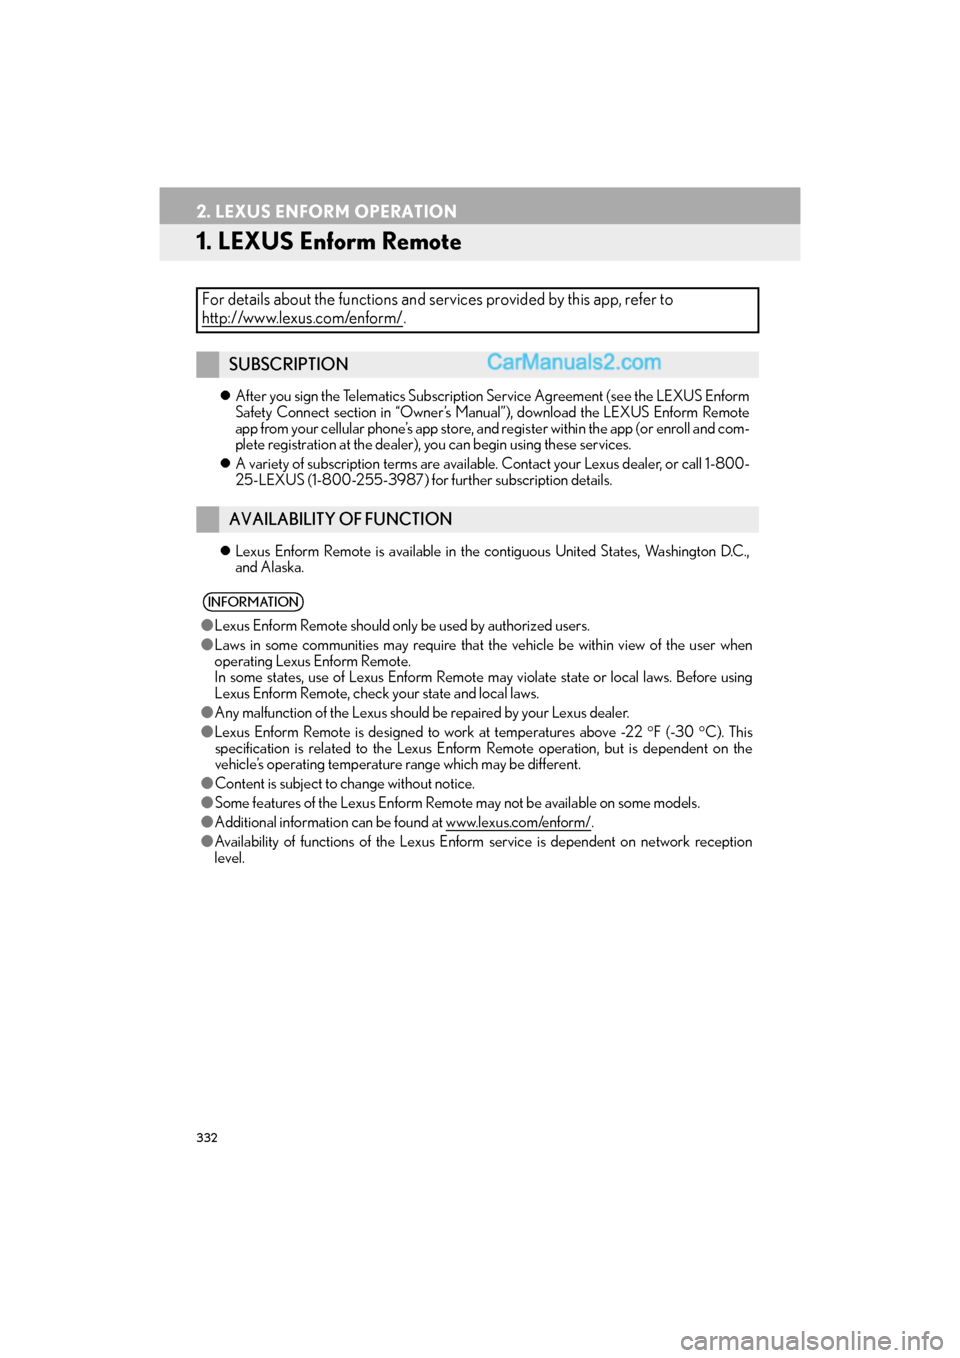 Lexus GS F 2016  Navigation Manual 332
GS_Navi+MM_OM30F12U_(U)15.09.01     12:22
2. LEXUS ENFORM OPERATION
1. LEXUS Enform Remote
�zAfter you sign the Telematics Subscription Service Agreement (see the LEXUS Enform
Safety Connect secti